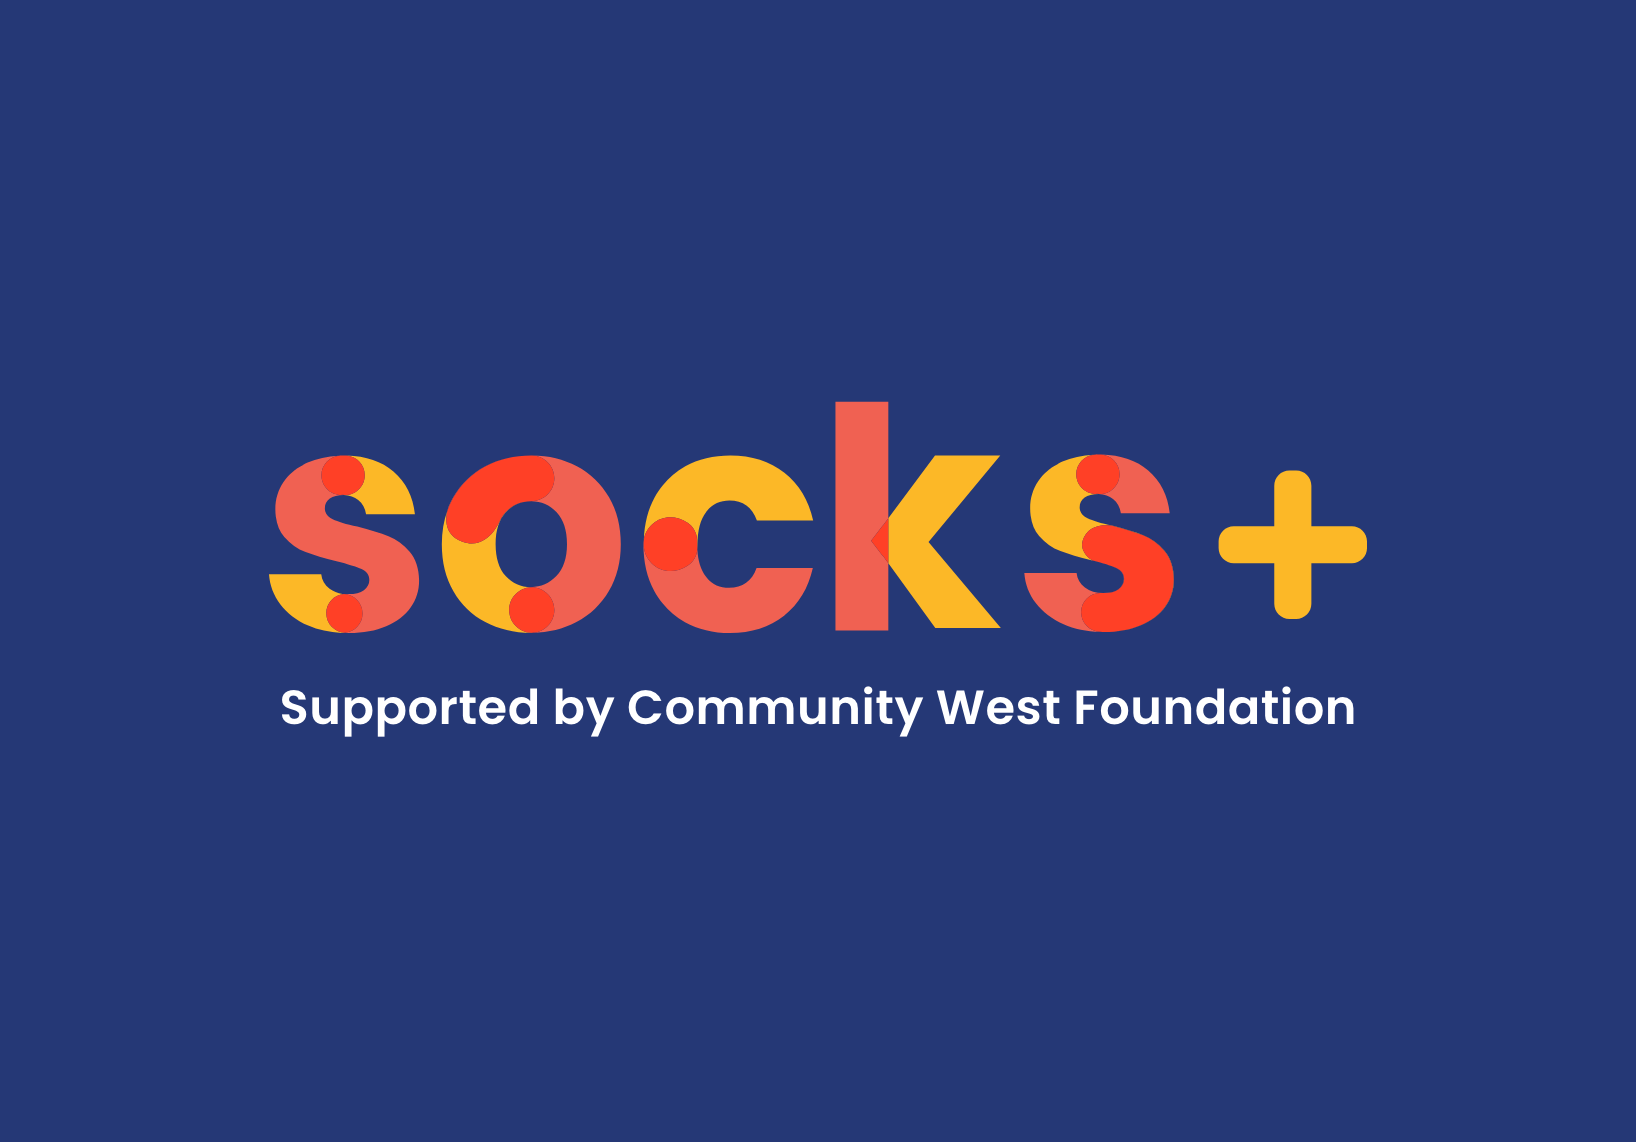 Socks+ Campaign logo and tagline